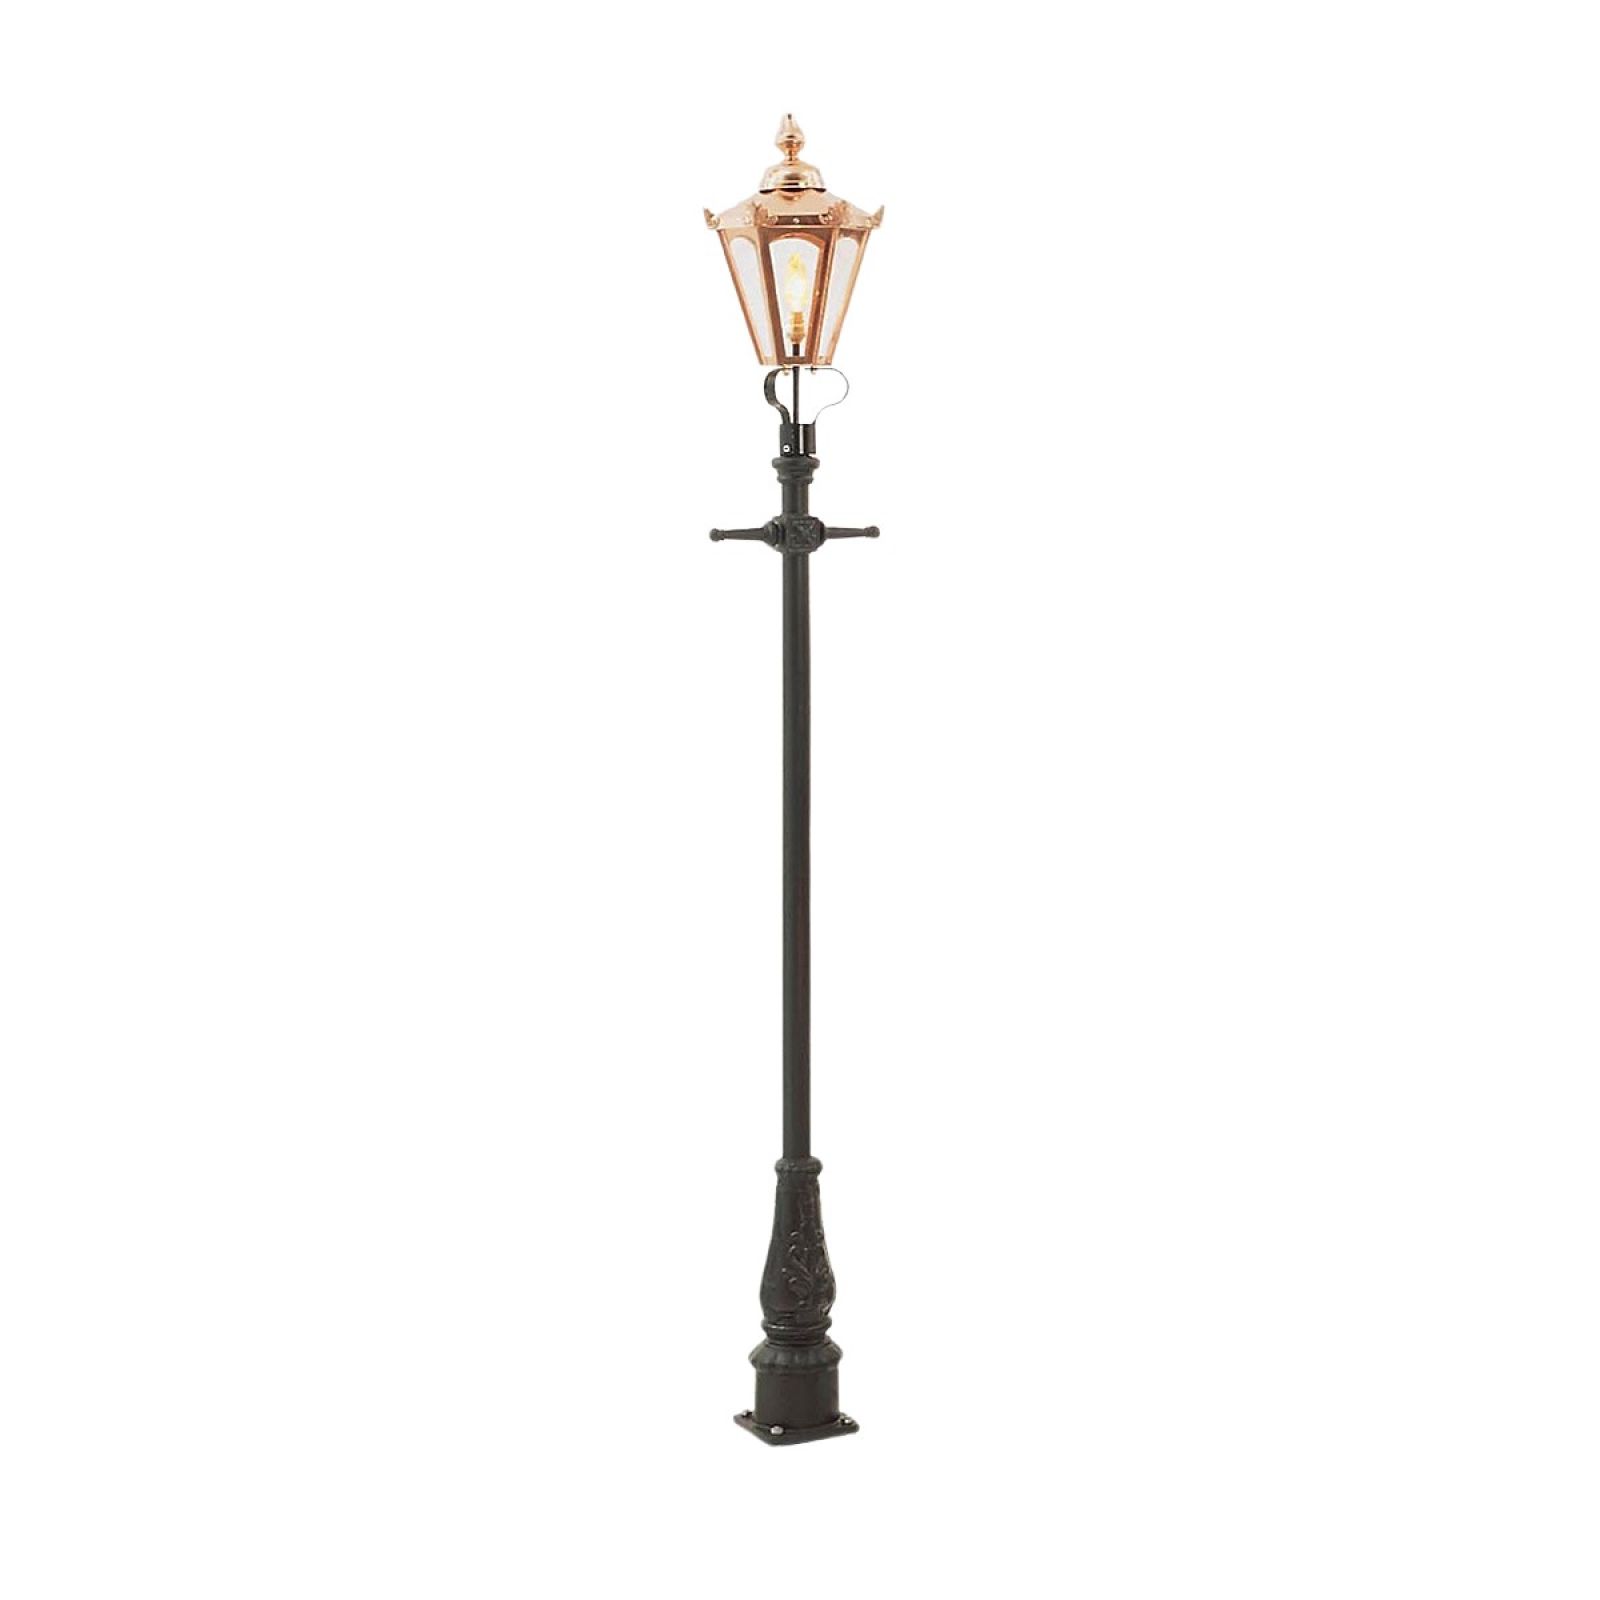 Lamp post 2310mm high and copper hexagonal lantern